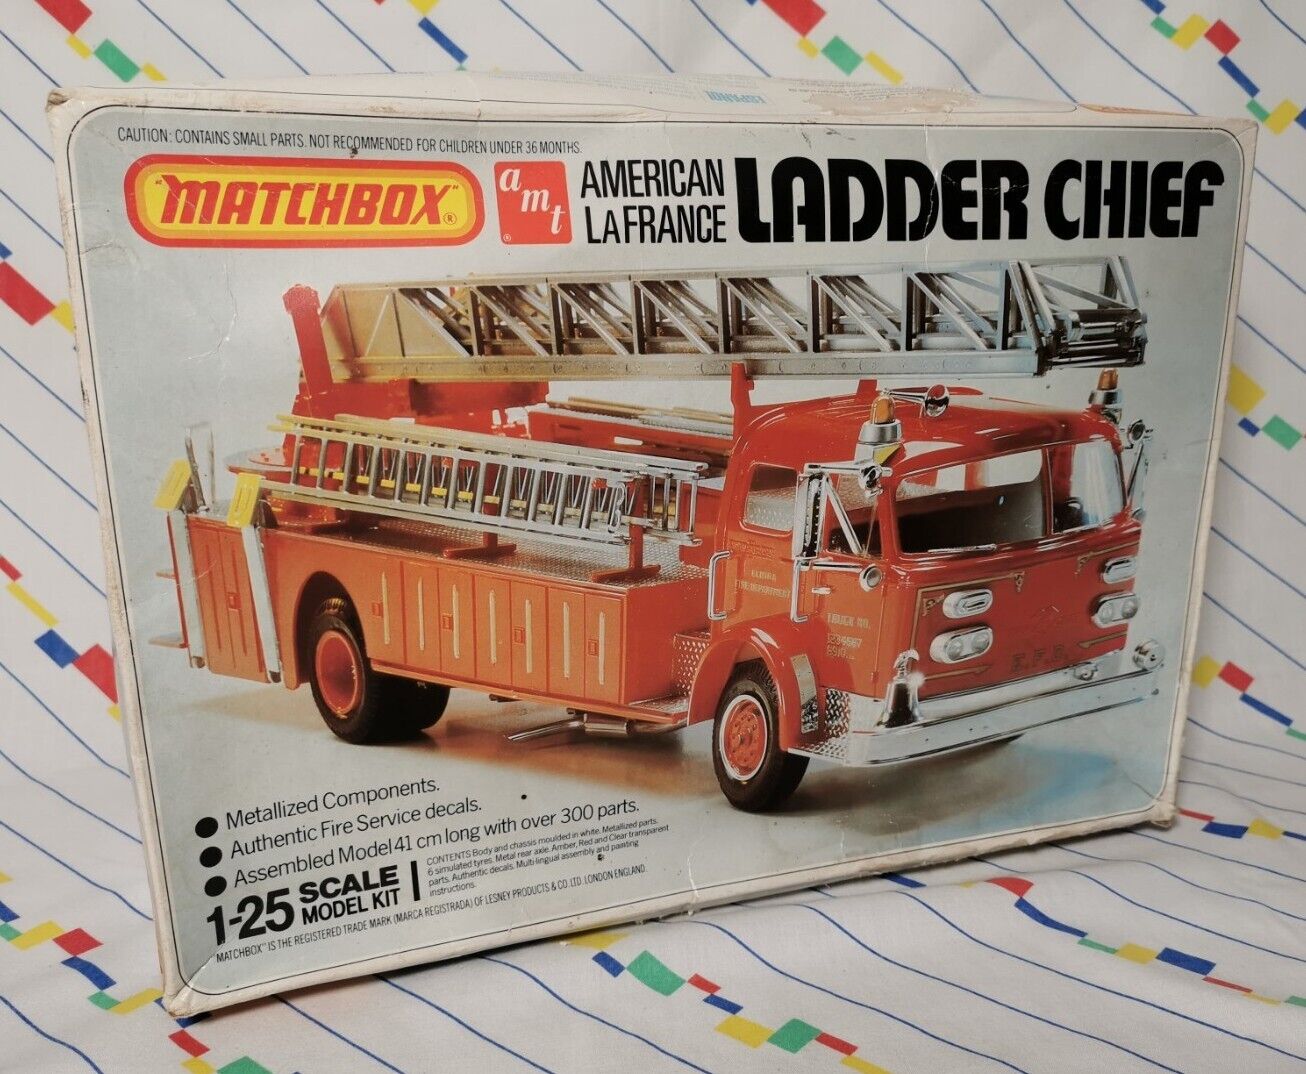 AMT Matchbox 1:25 American LaFrance Ladder Chief Plastic Model Kit PK-6121 1979